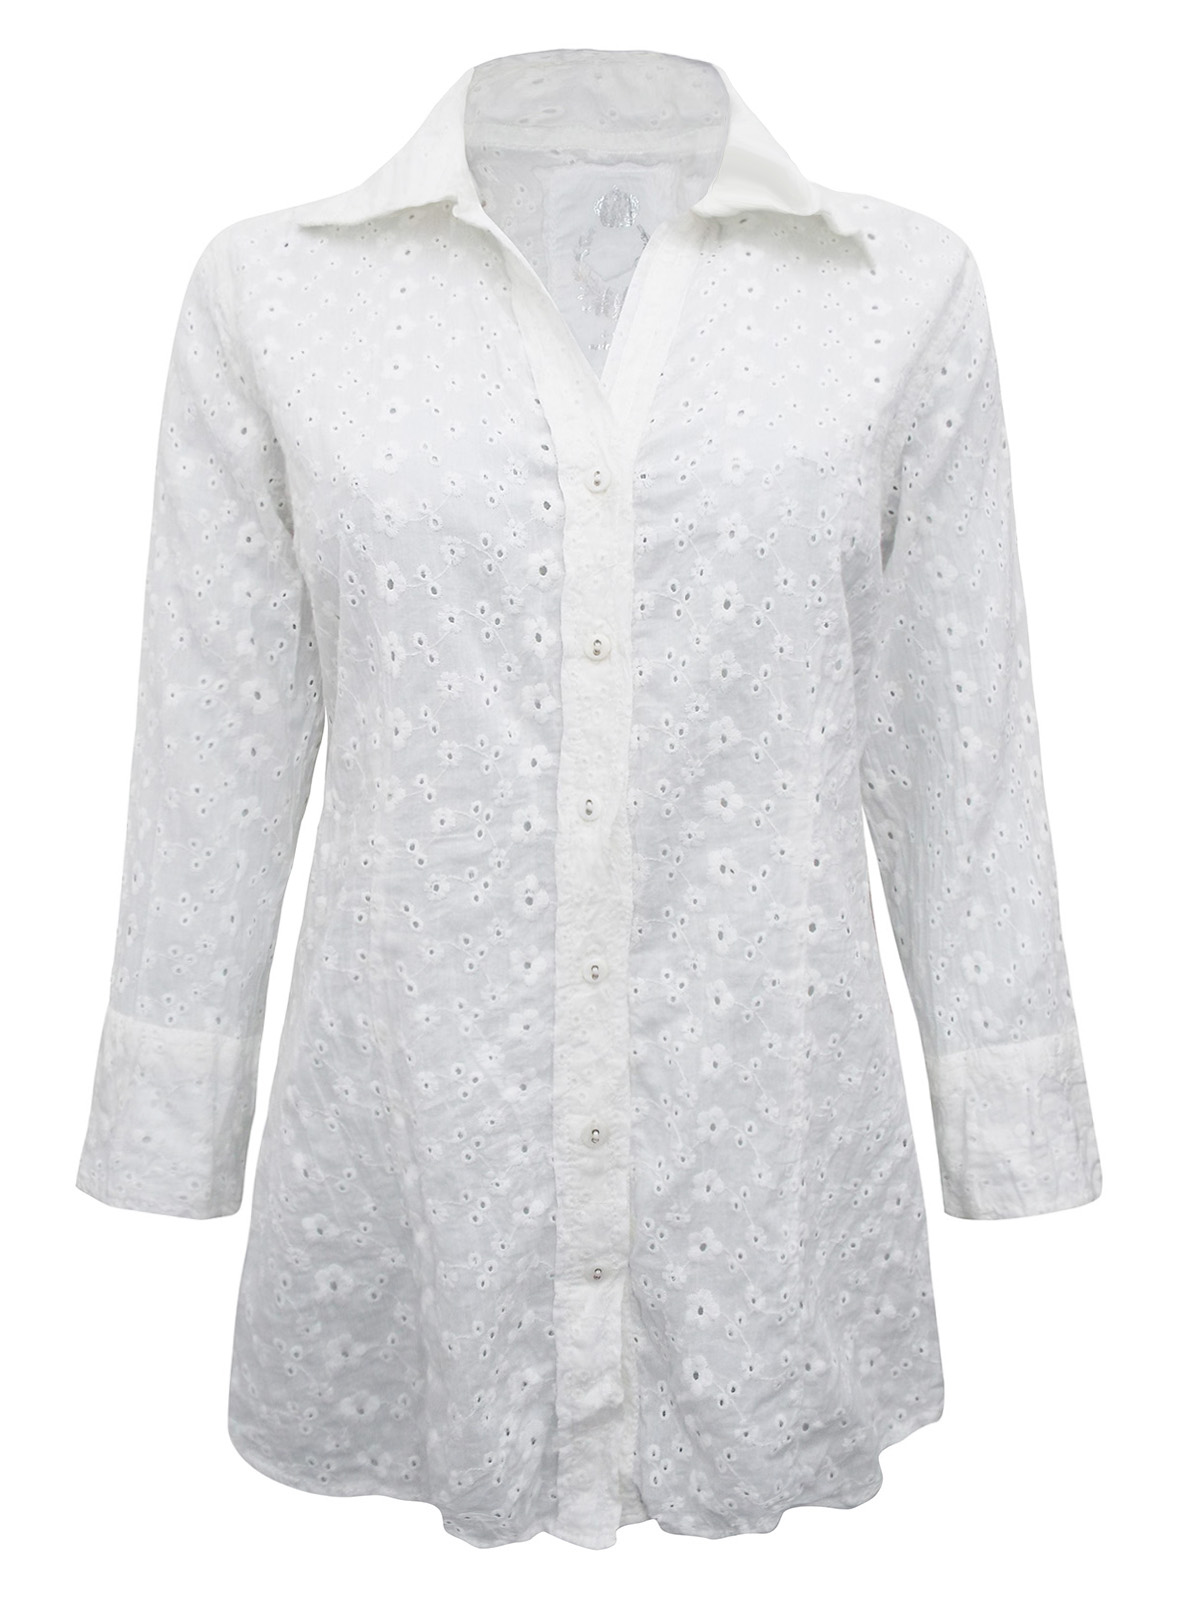 CINO - - CINO WHITE Eyelet Floral Crinkle Cotton Shirt - Size 8 to 18 ...